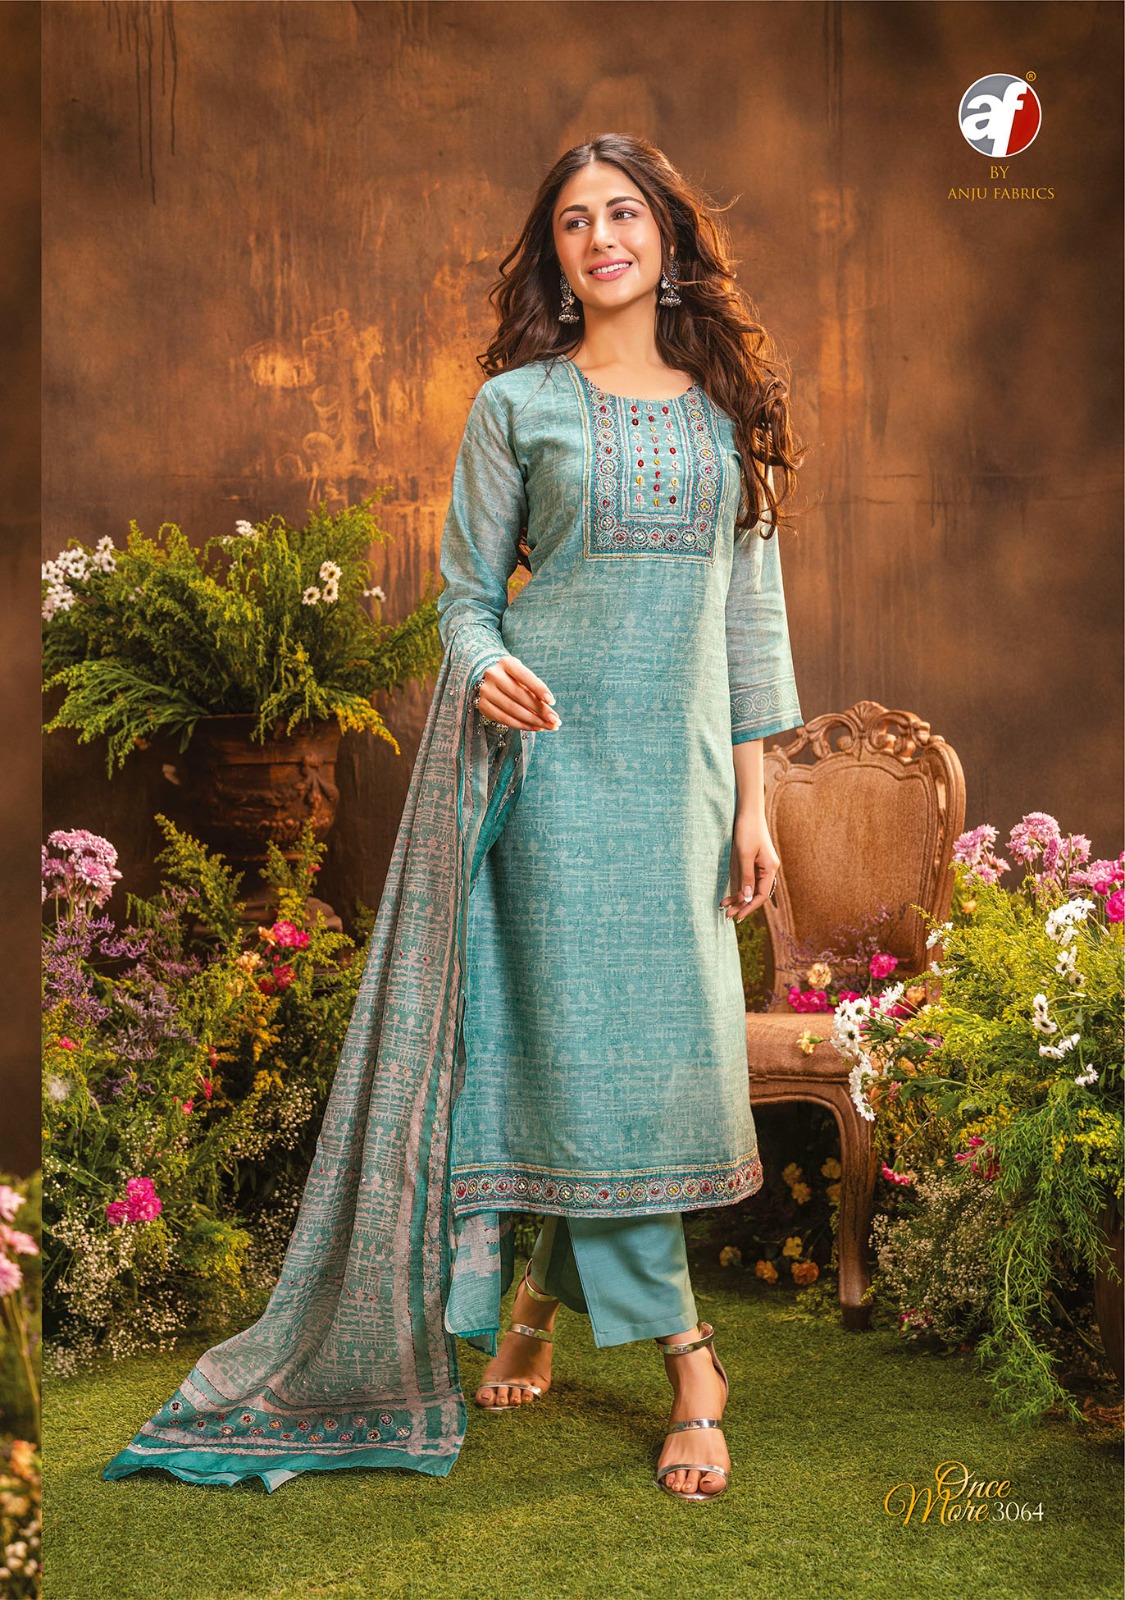 Anju Fabrics Once More Vol 2 Designer Wedding Party Salwar Suits collection 11